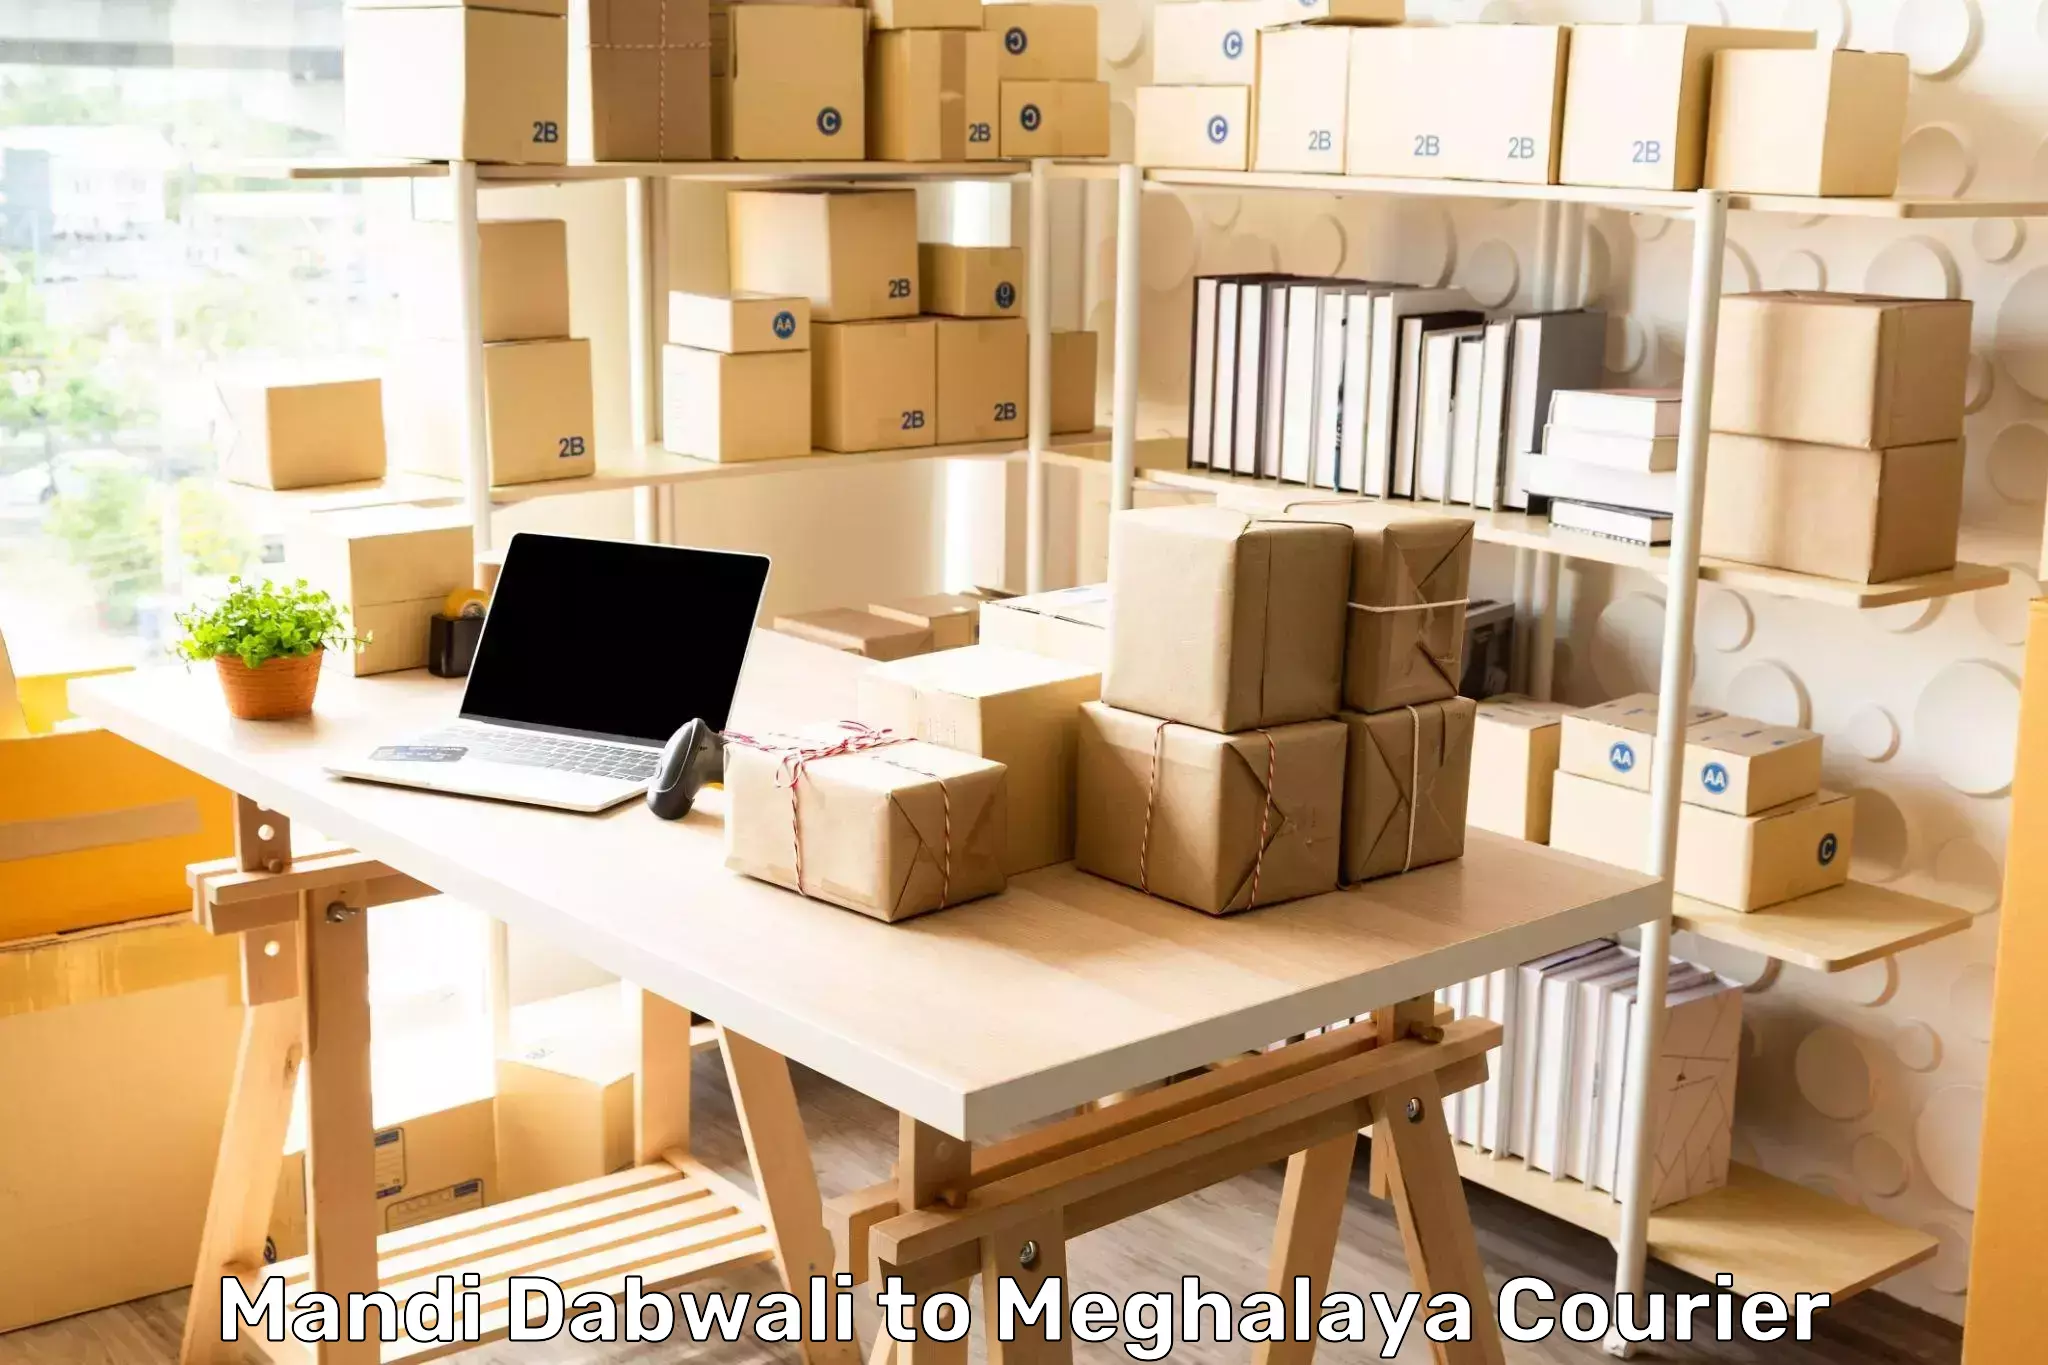 Package tracking in Mandi Dabwali to Meghalaya